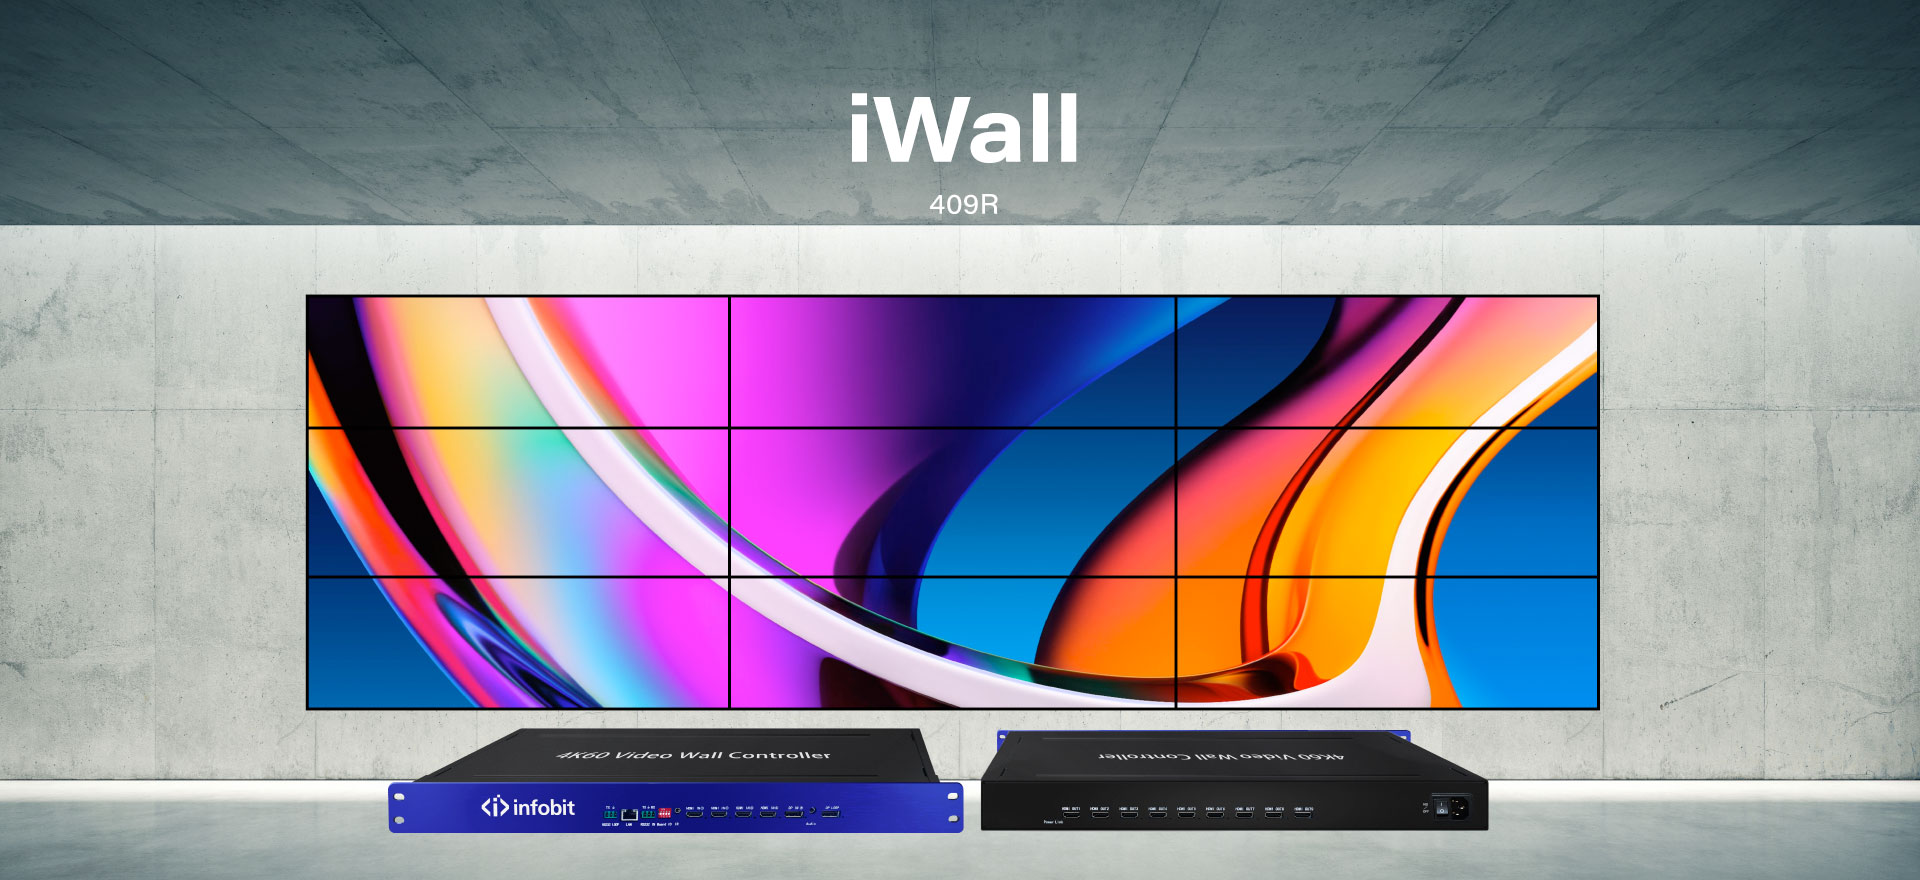 iWall 409R 4K60 Video Wall Controller